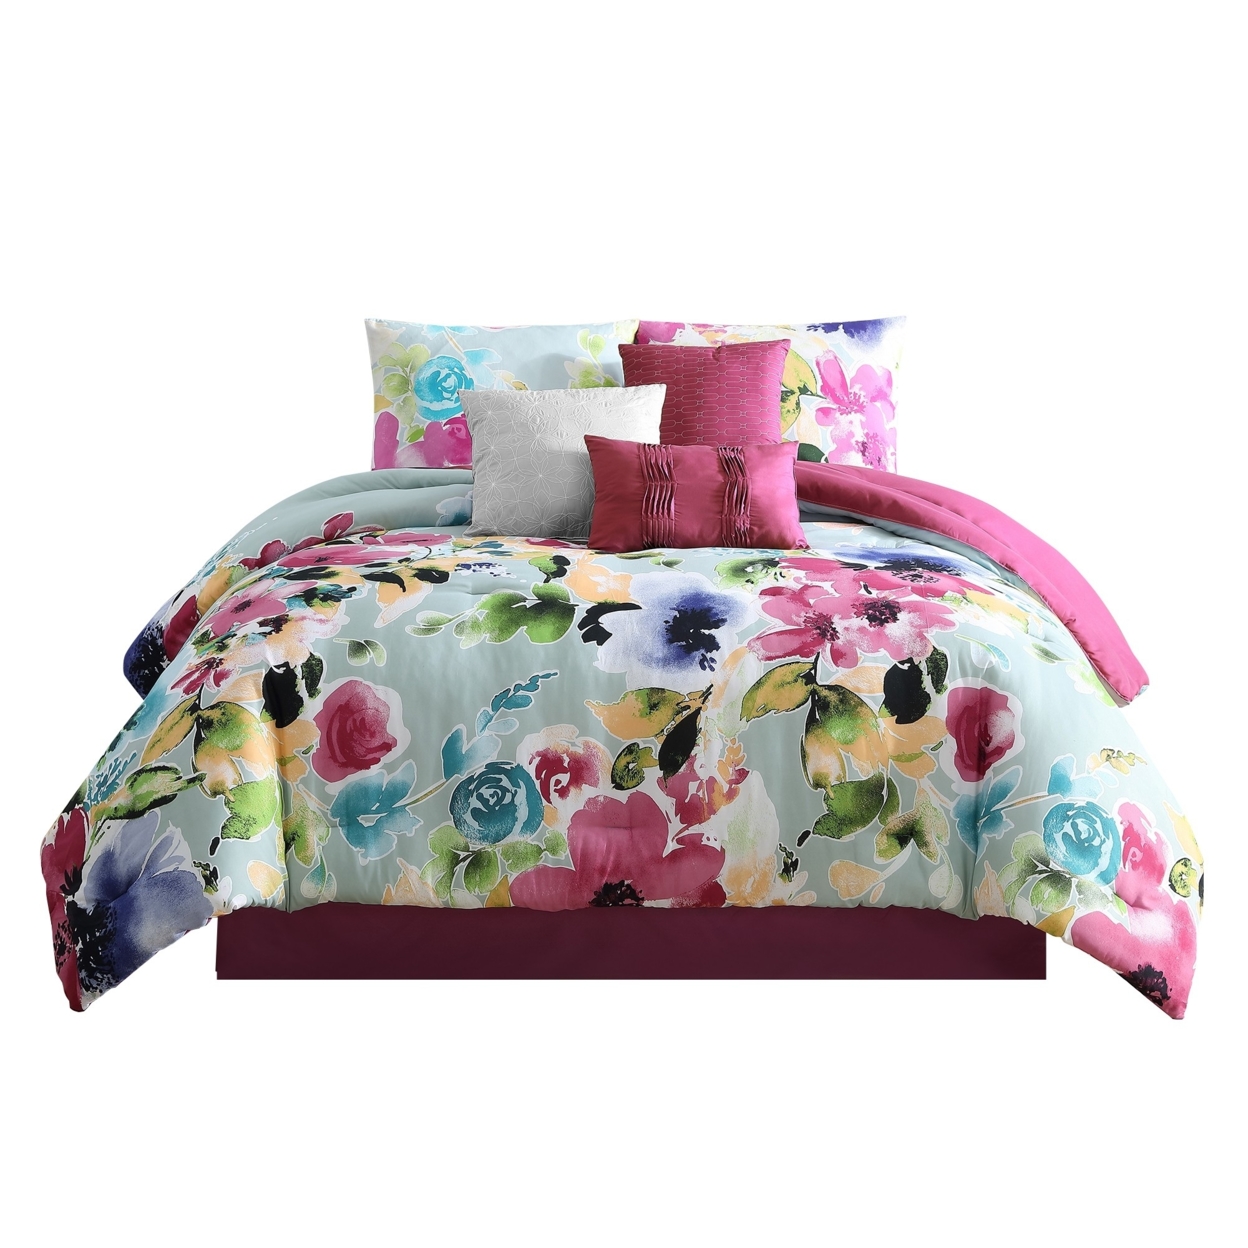 7 Piece King Comforter Set With Bright Floral Print, Multicolor- Saltoro Sherpi